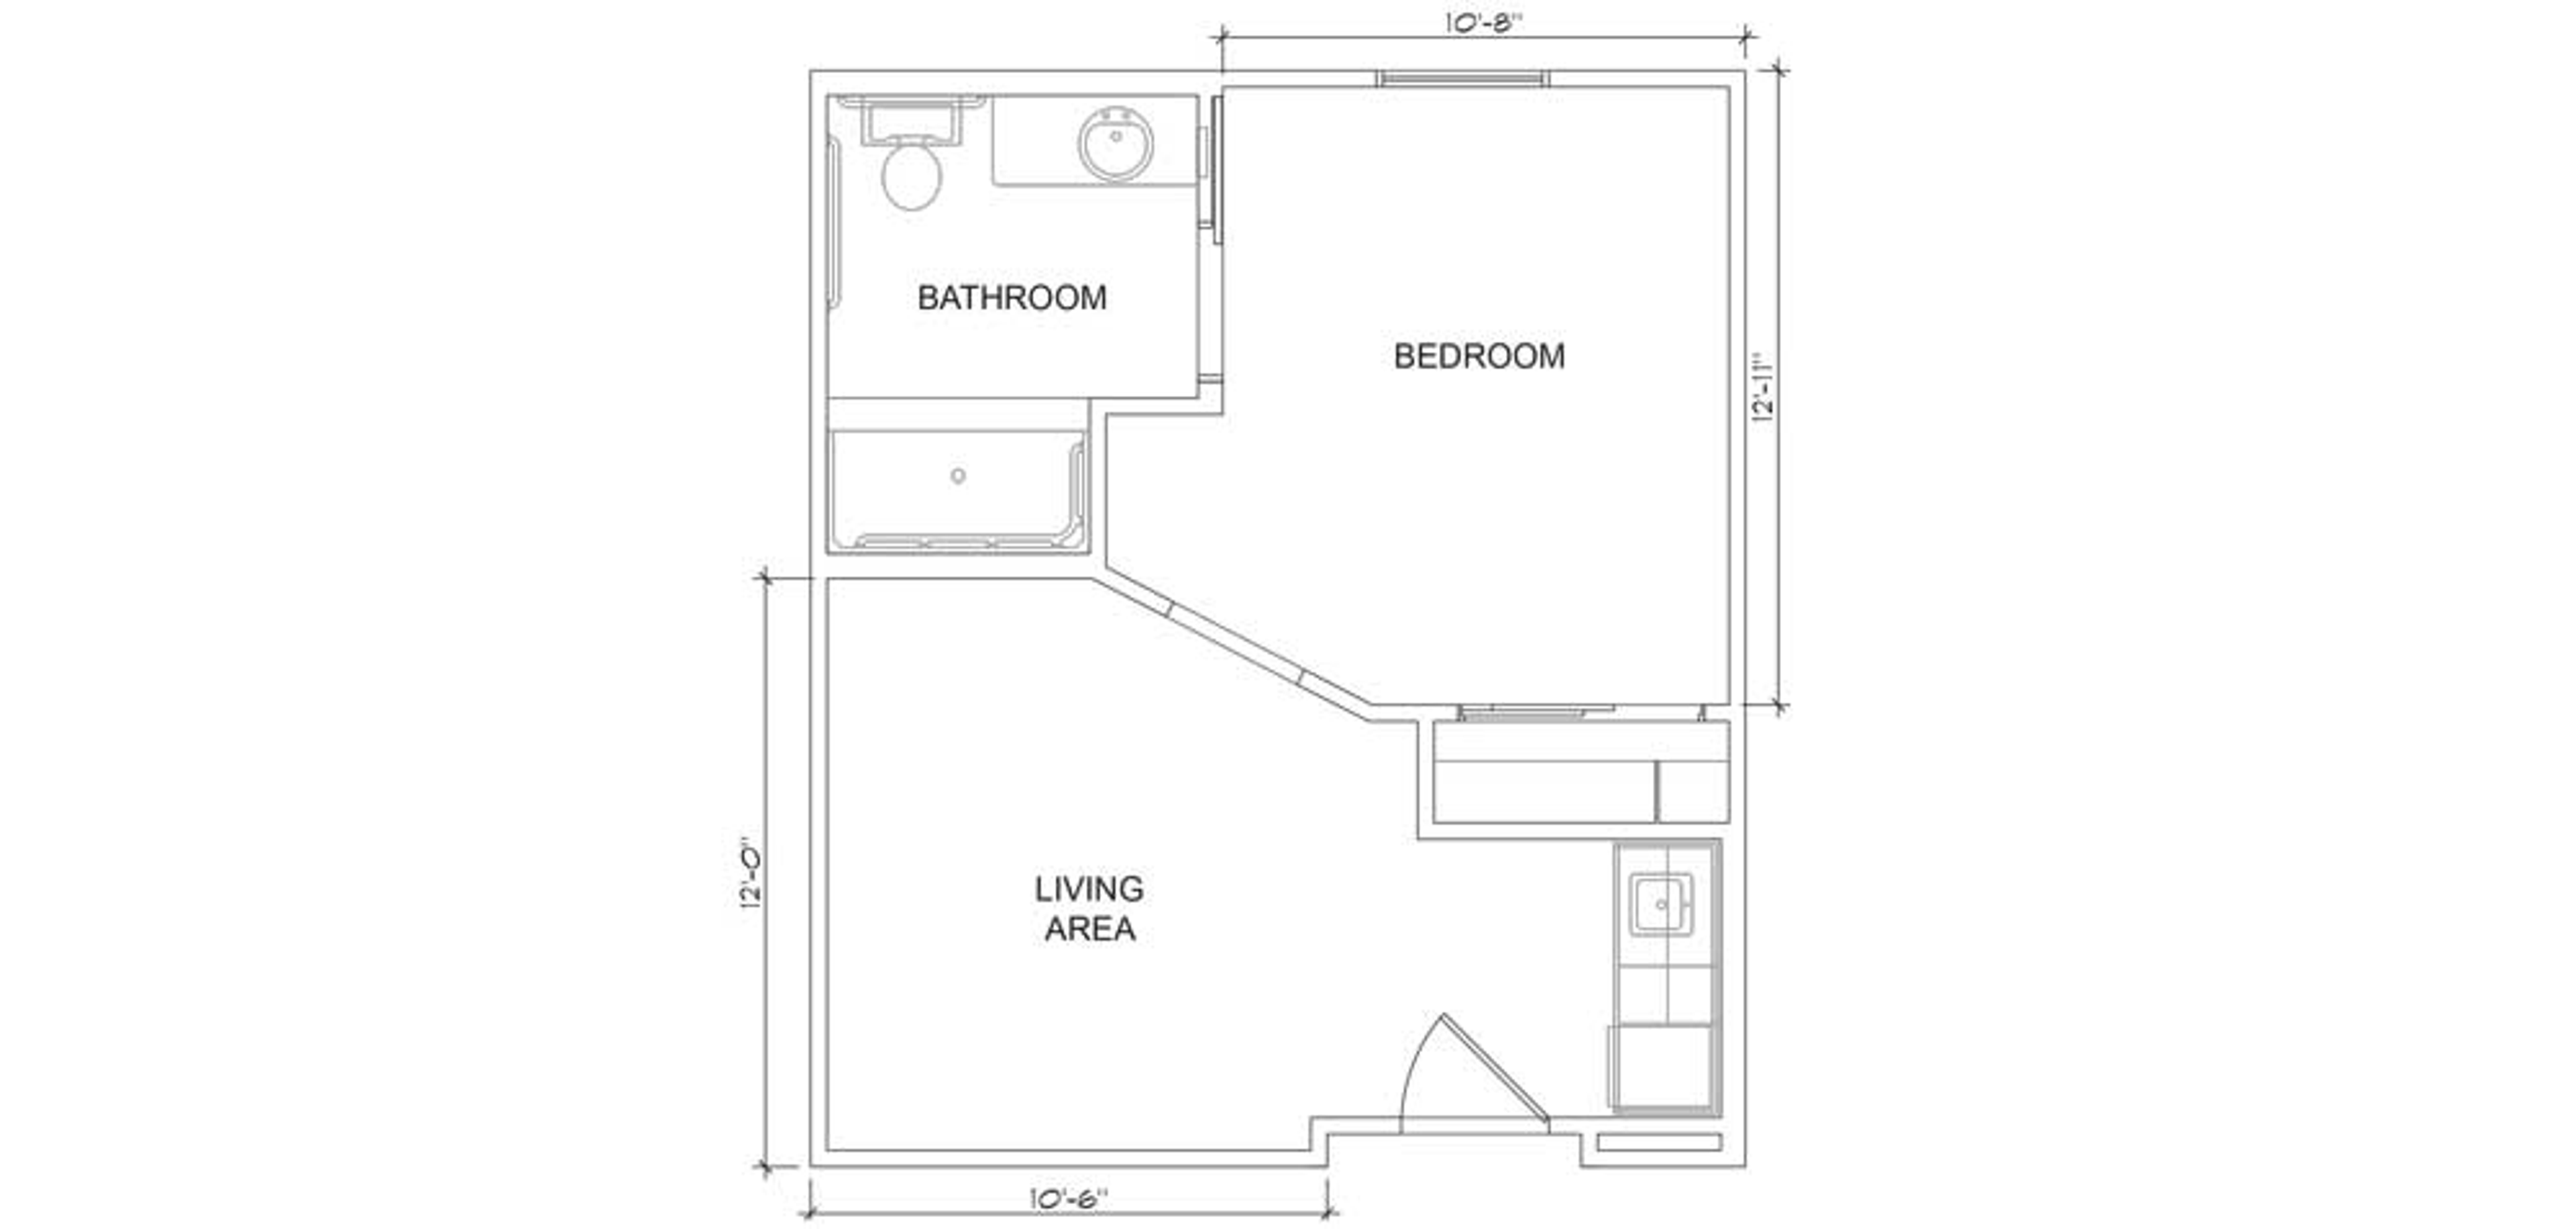 Floorplan - Buffalo Creek - 1B 1B Deluxe Assisted Living